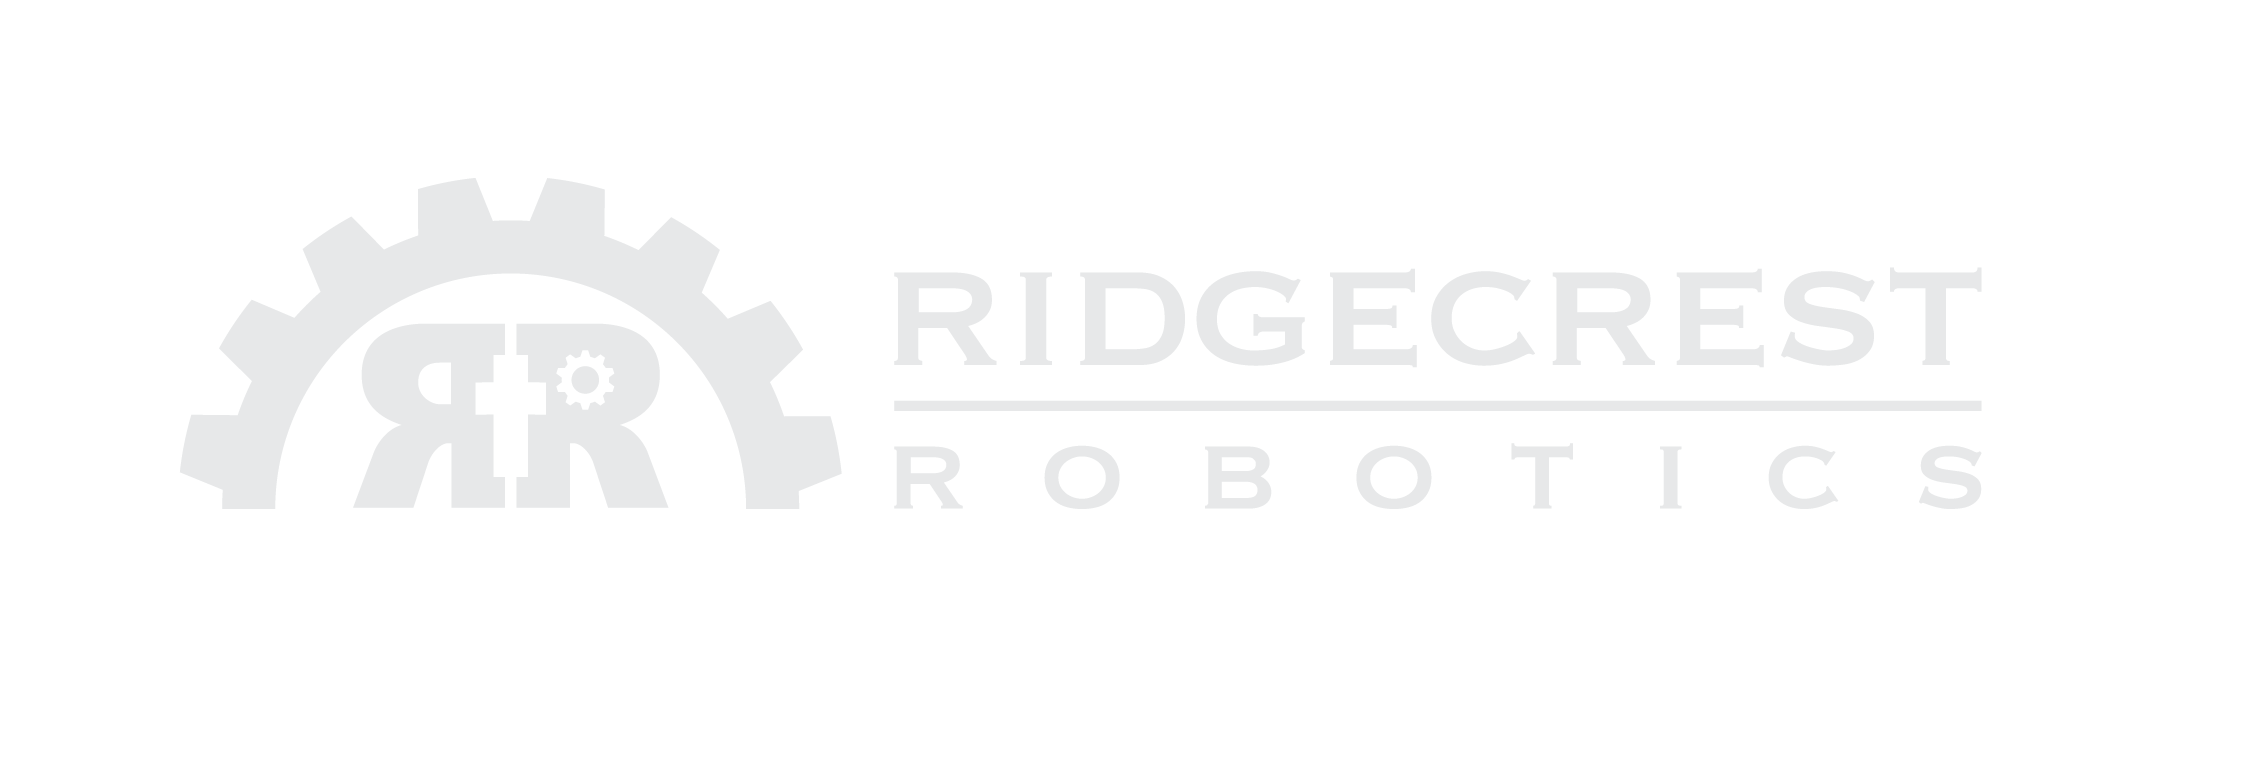 Ridgecrest Robotics